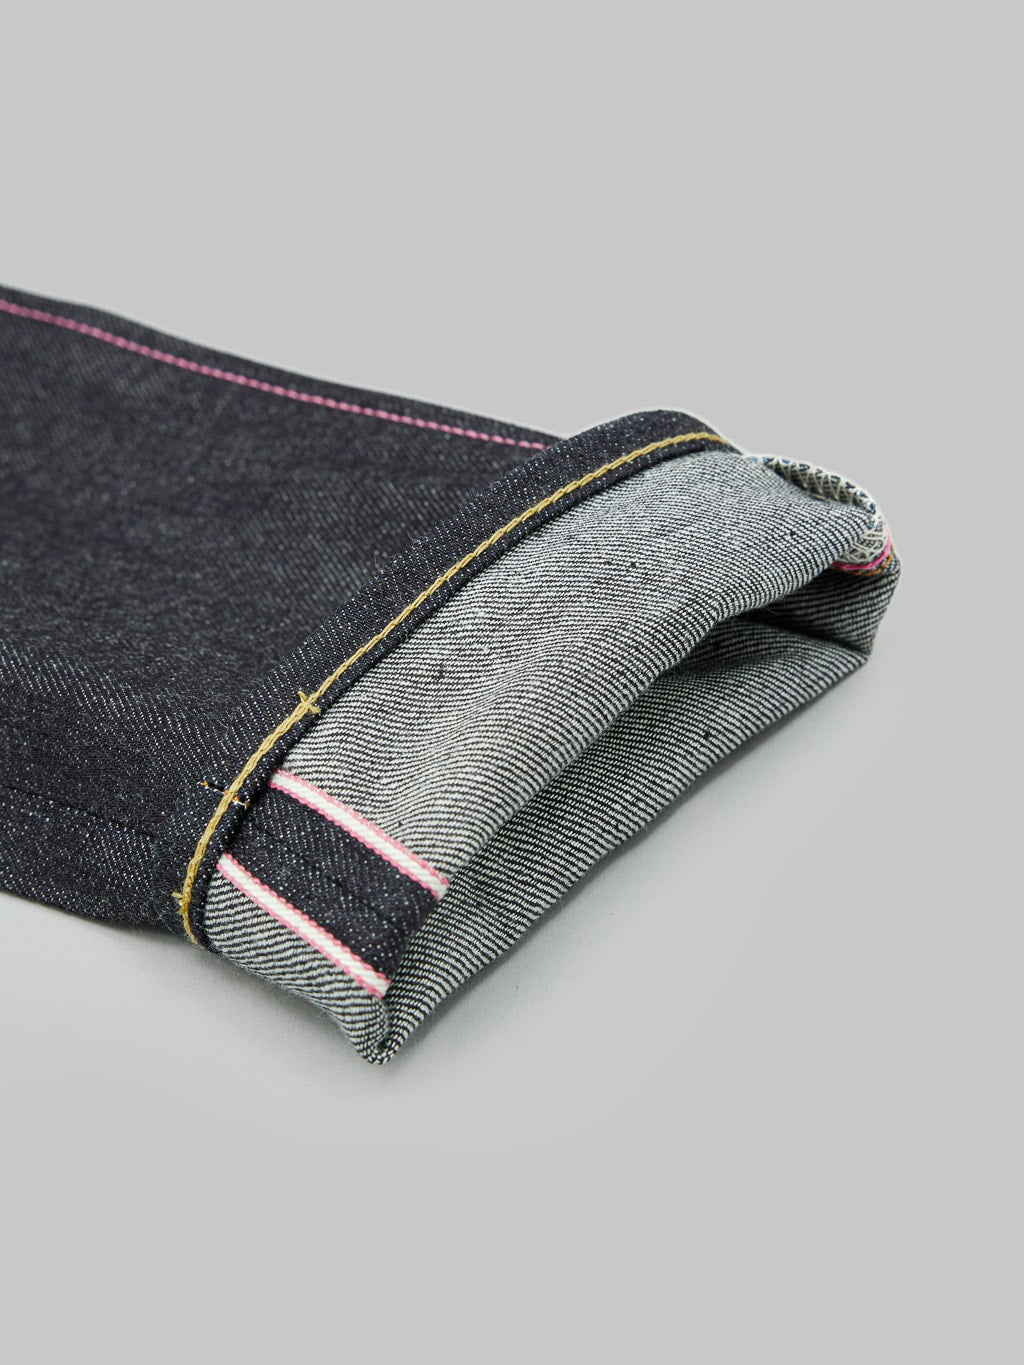 momotaro jeans 0306 12 12oz selvedge denim tight tapered pink selvedge closeup